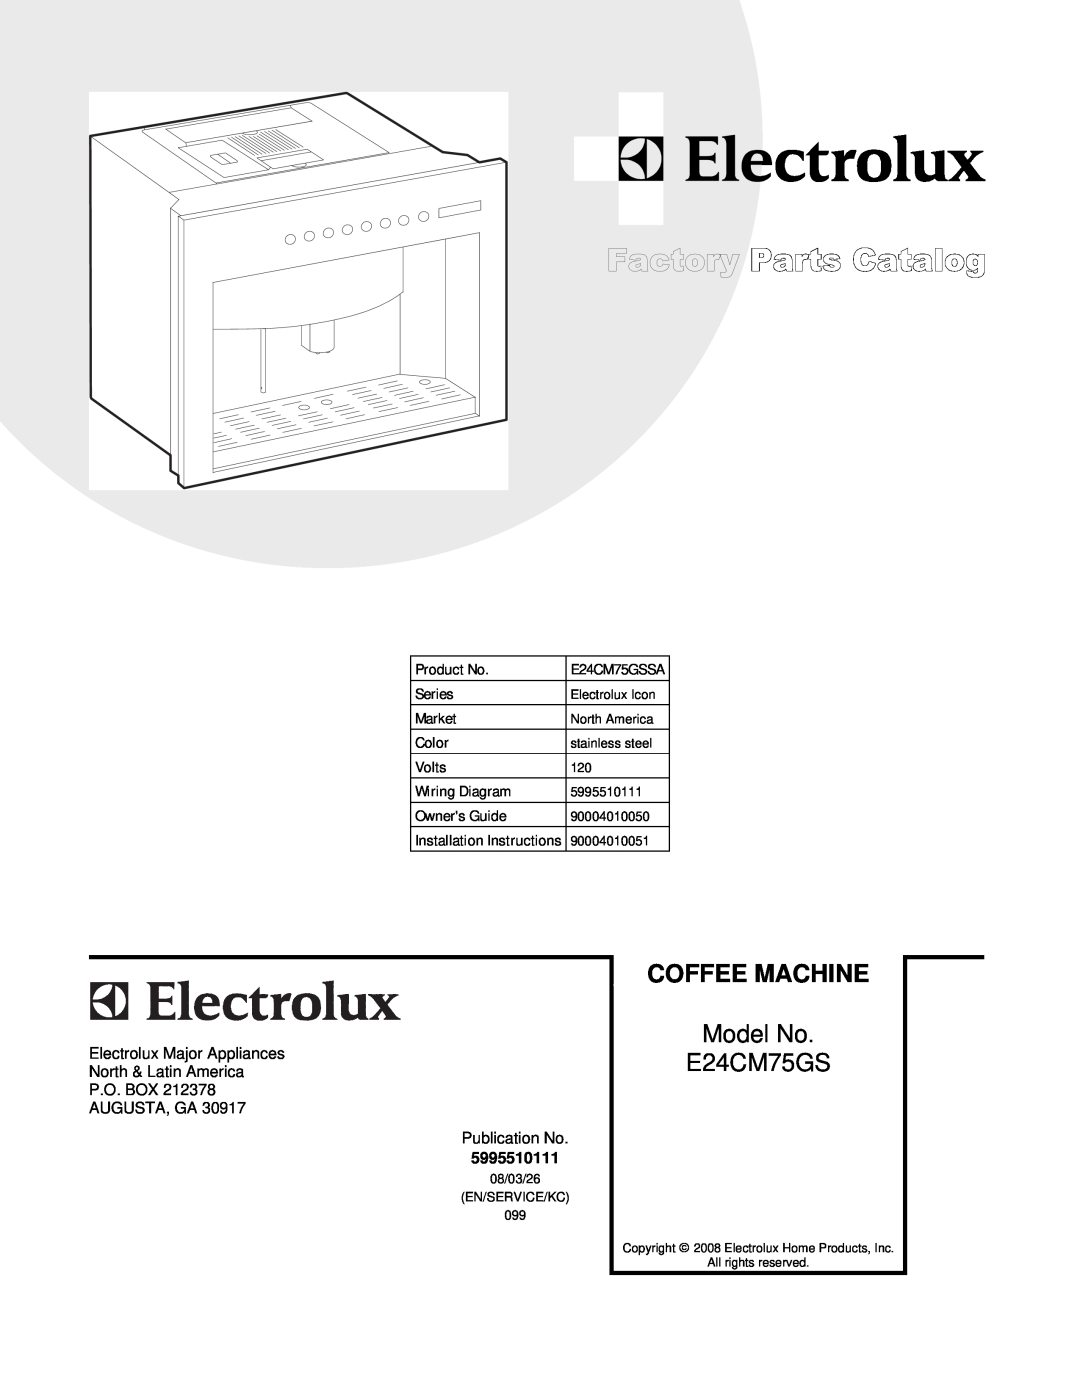 Electrolux installation instructions Coffee Machine, Model No, GE24CM75GSSA.eps, WE24CM75GSSA.eps, P.O. Box 